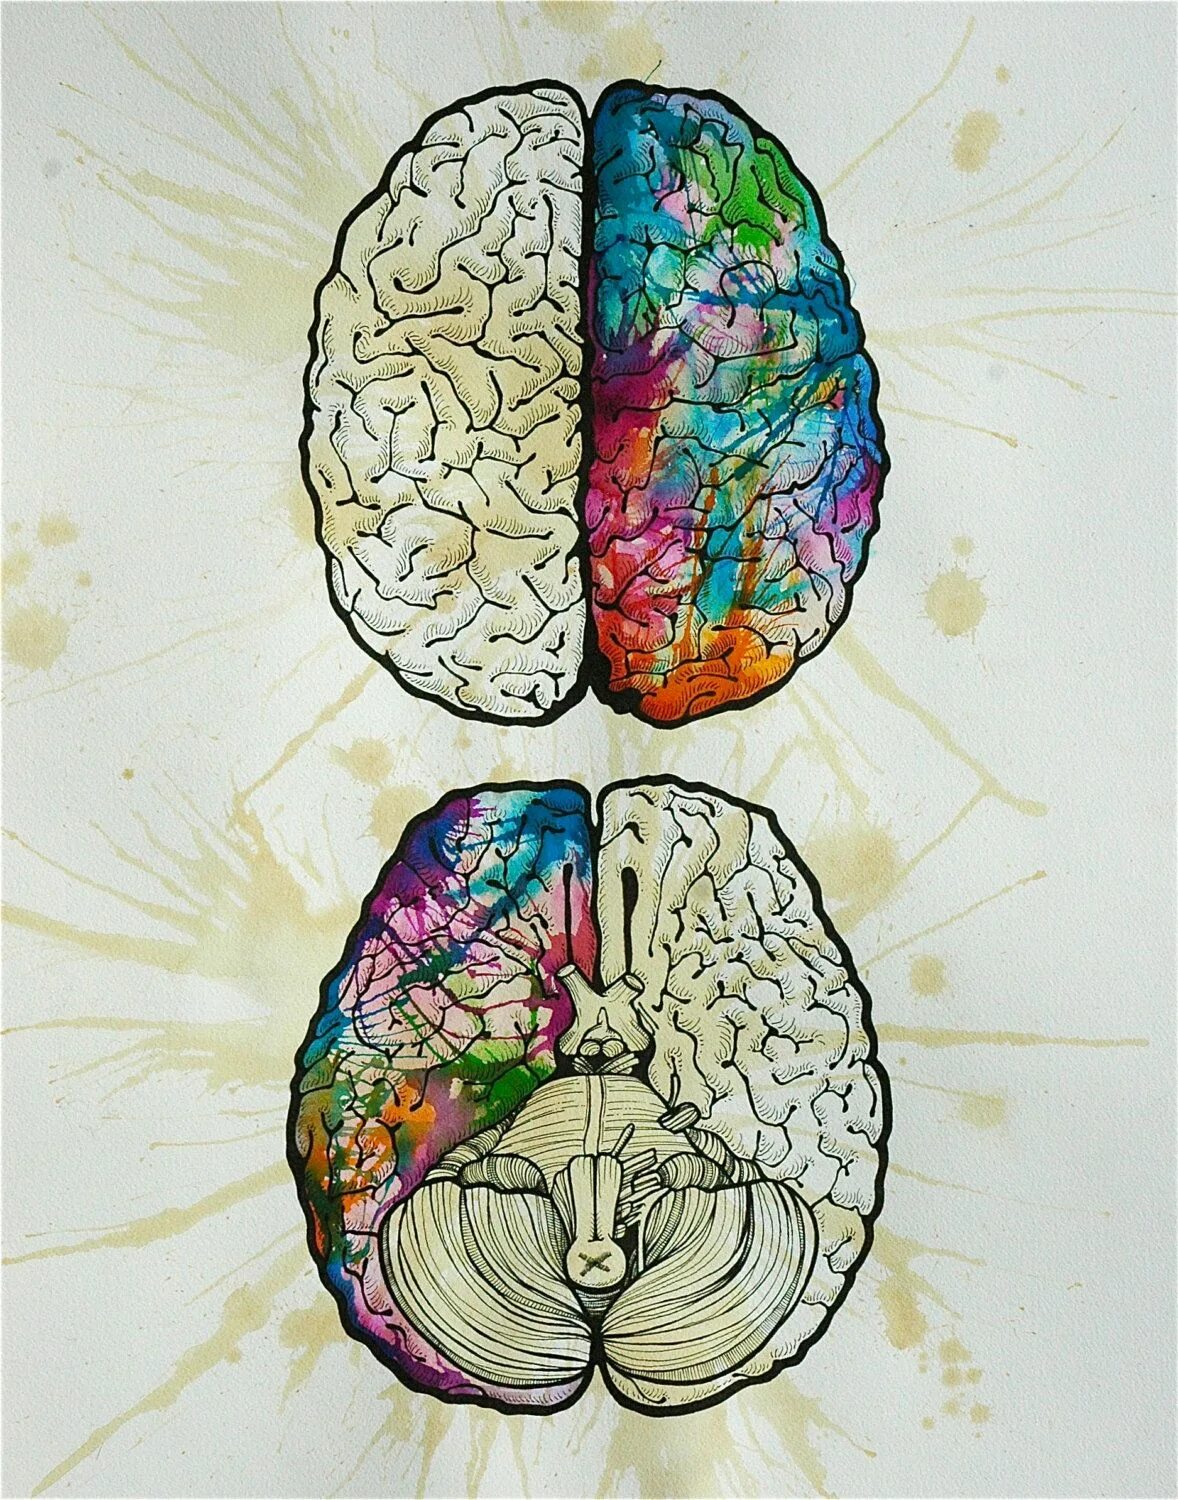 Полушария мозга. Мозг рисунок. Асимметрия полушарий головного мозга. Функциональная асимметрия полушарий мозга. Полушария и руки